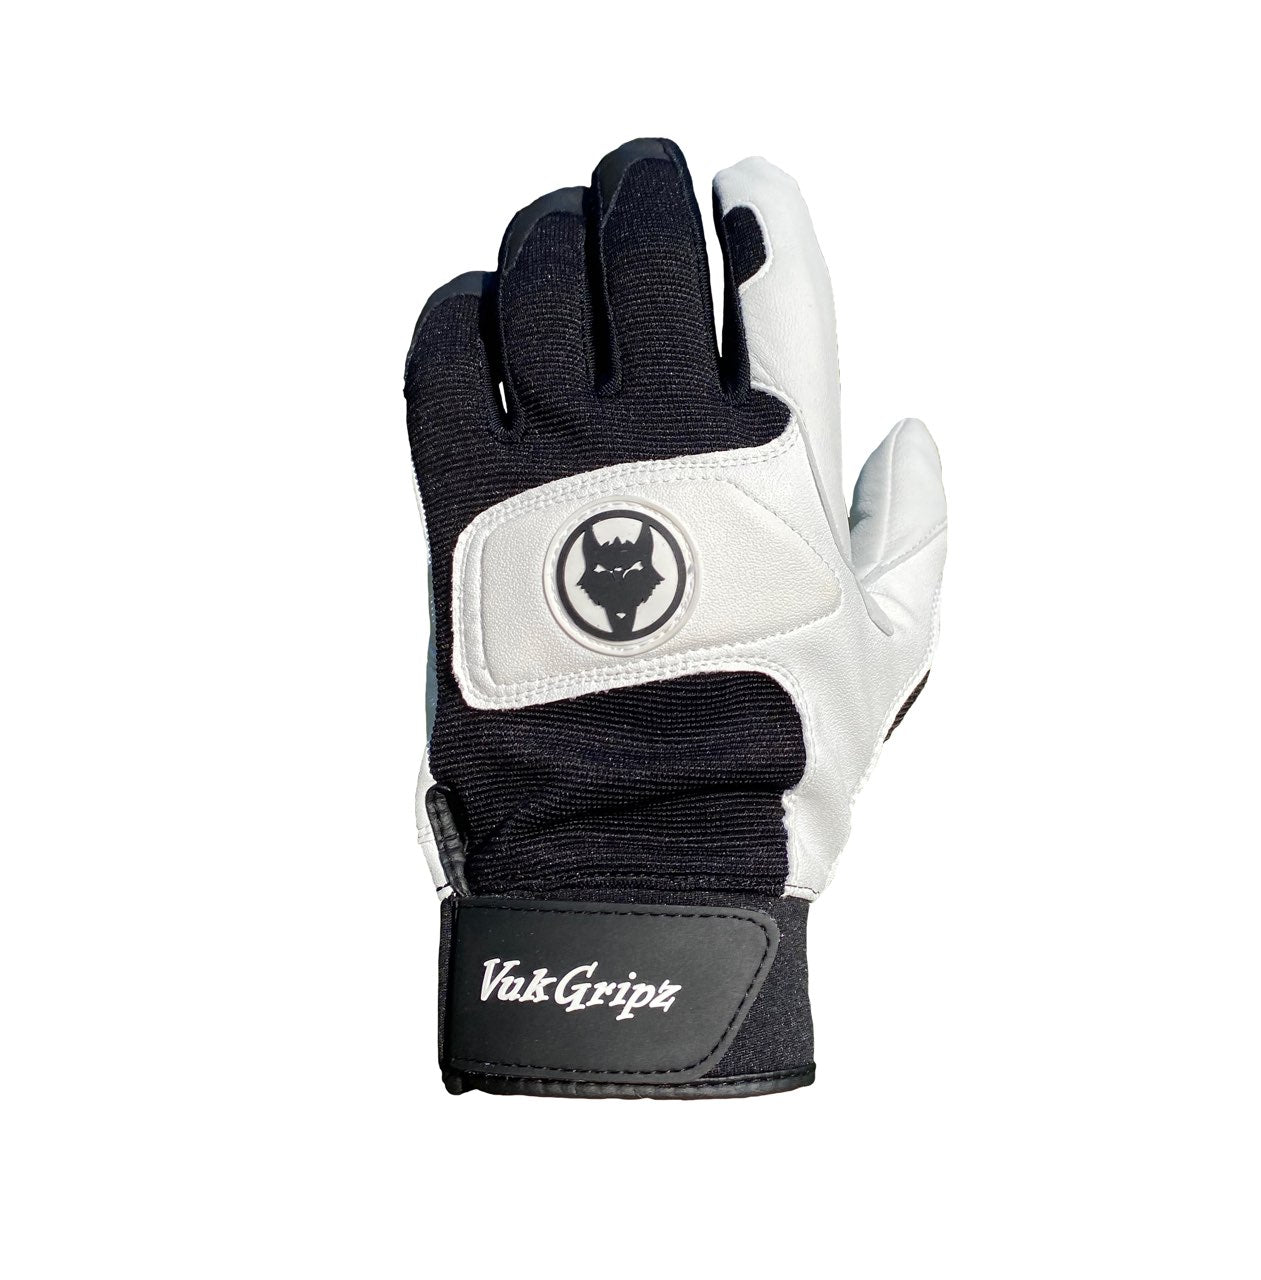 Front View Black & White Canine VukGripz Batting Gloves